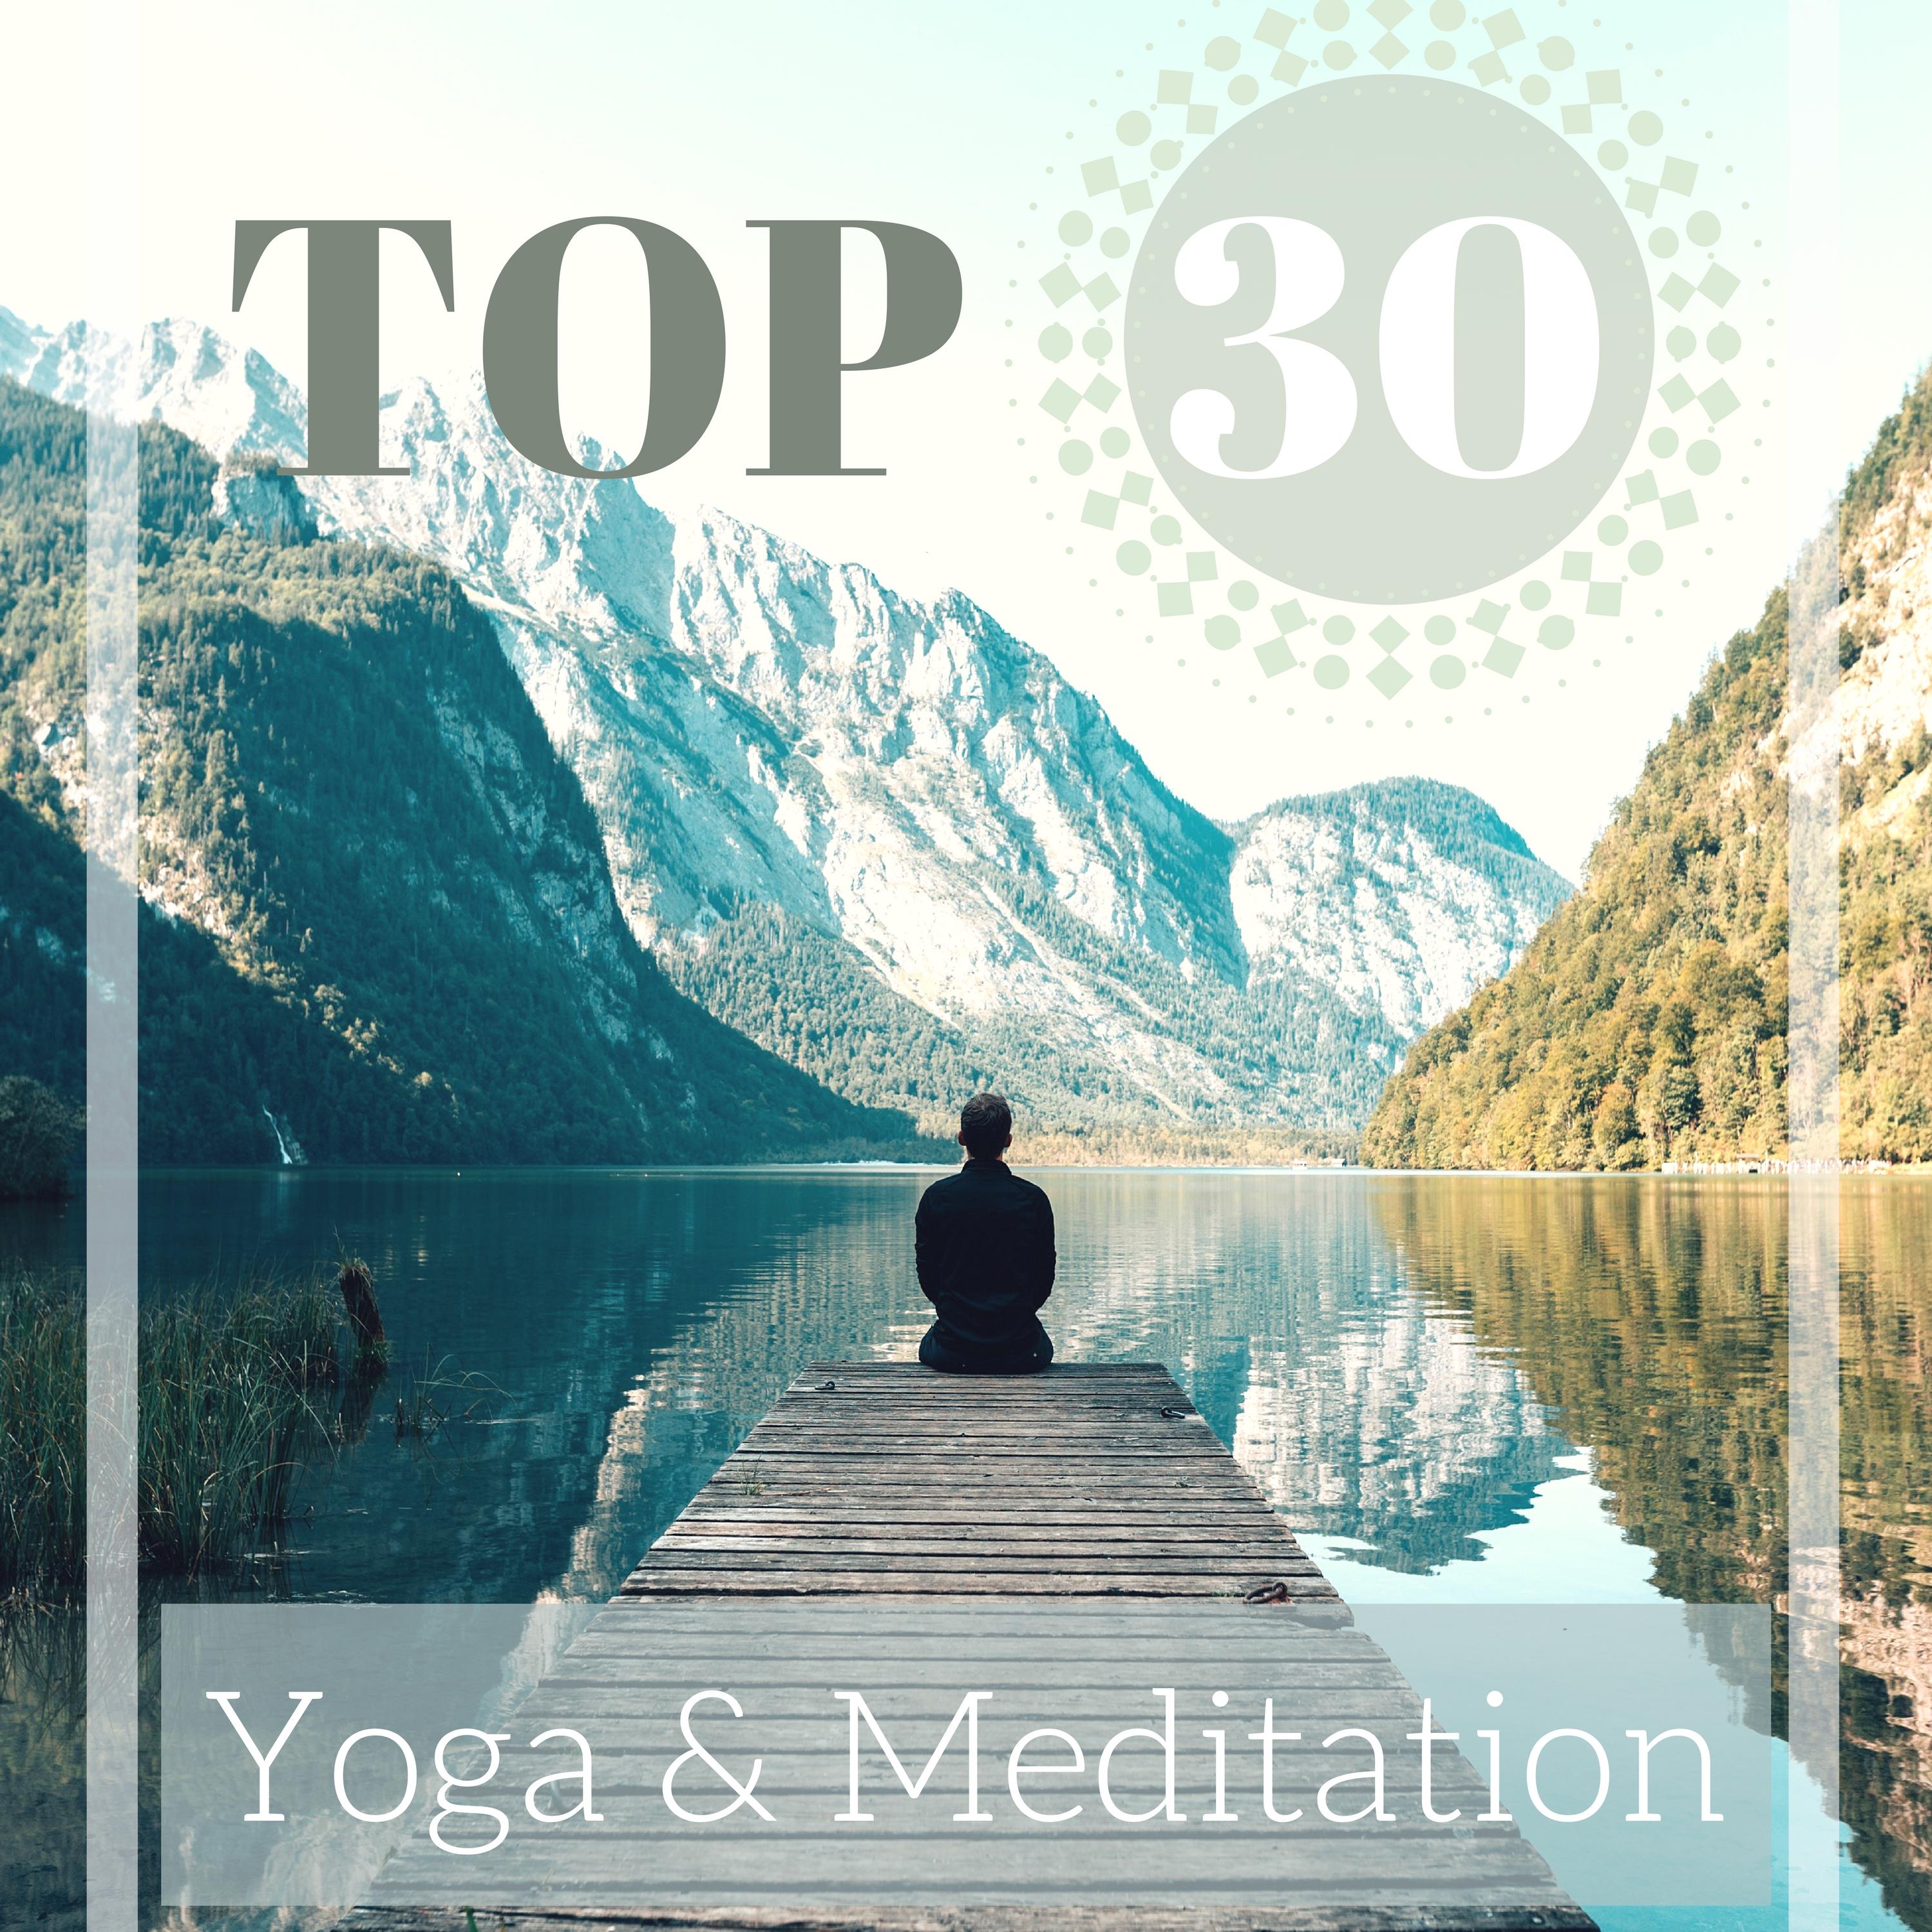 Top 30 Yoga & Meditation - Atementspannung und Yoga Musik, Progressive Muskelentspannung